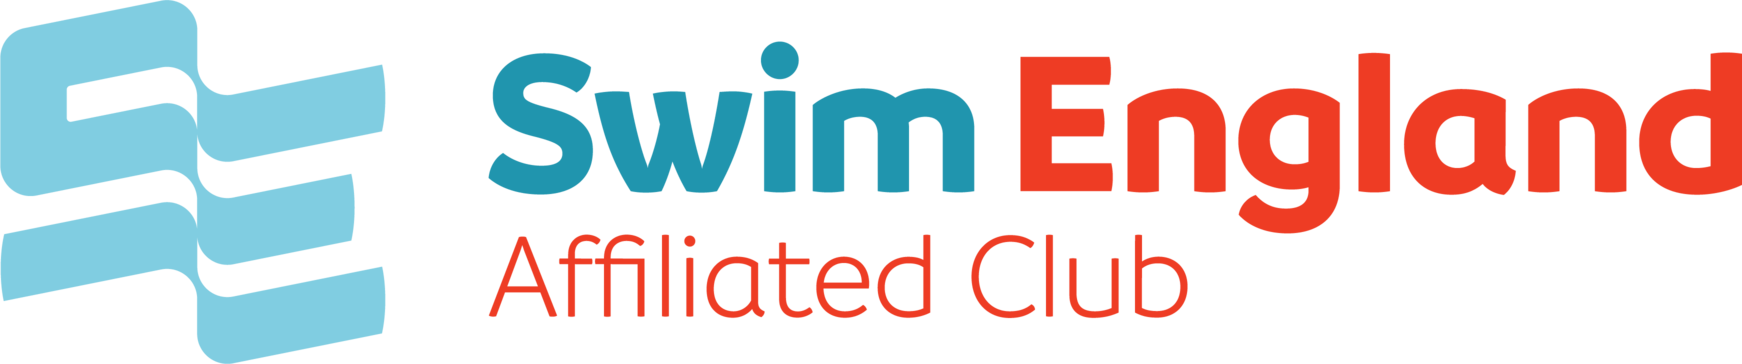 Swim England Affiliated Club